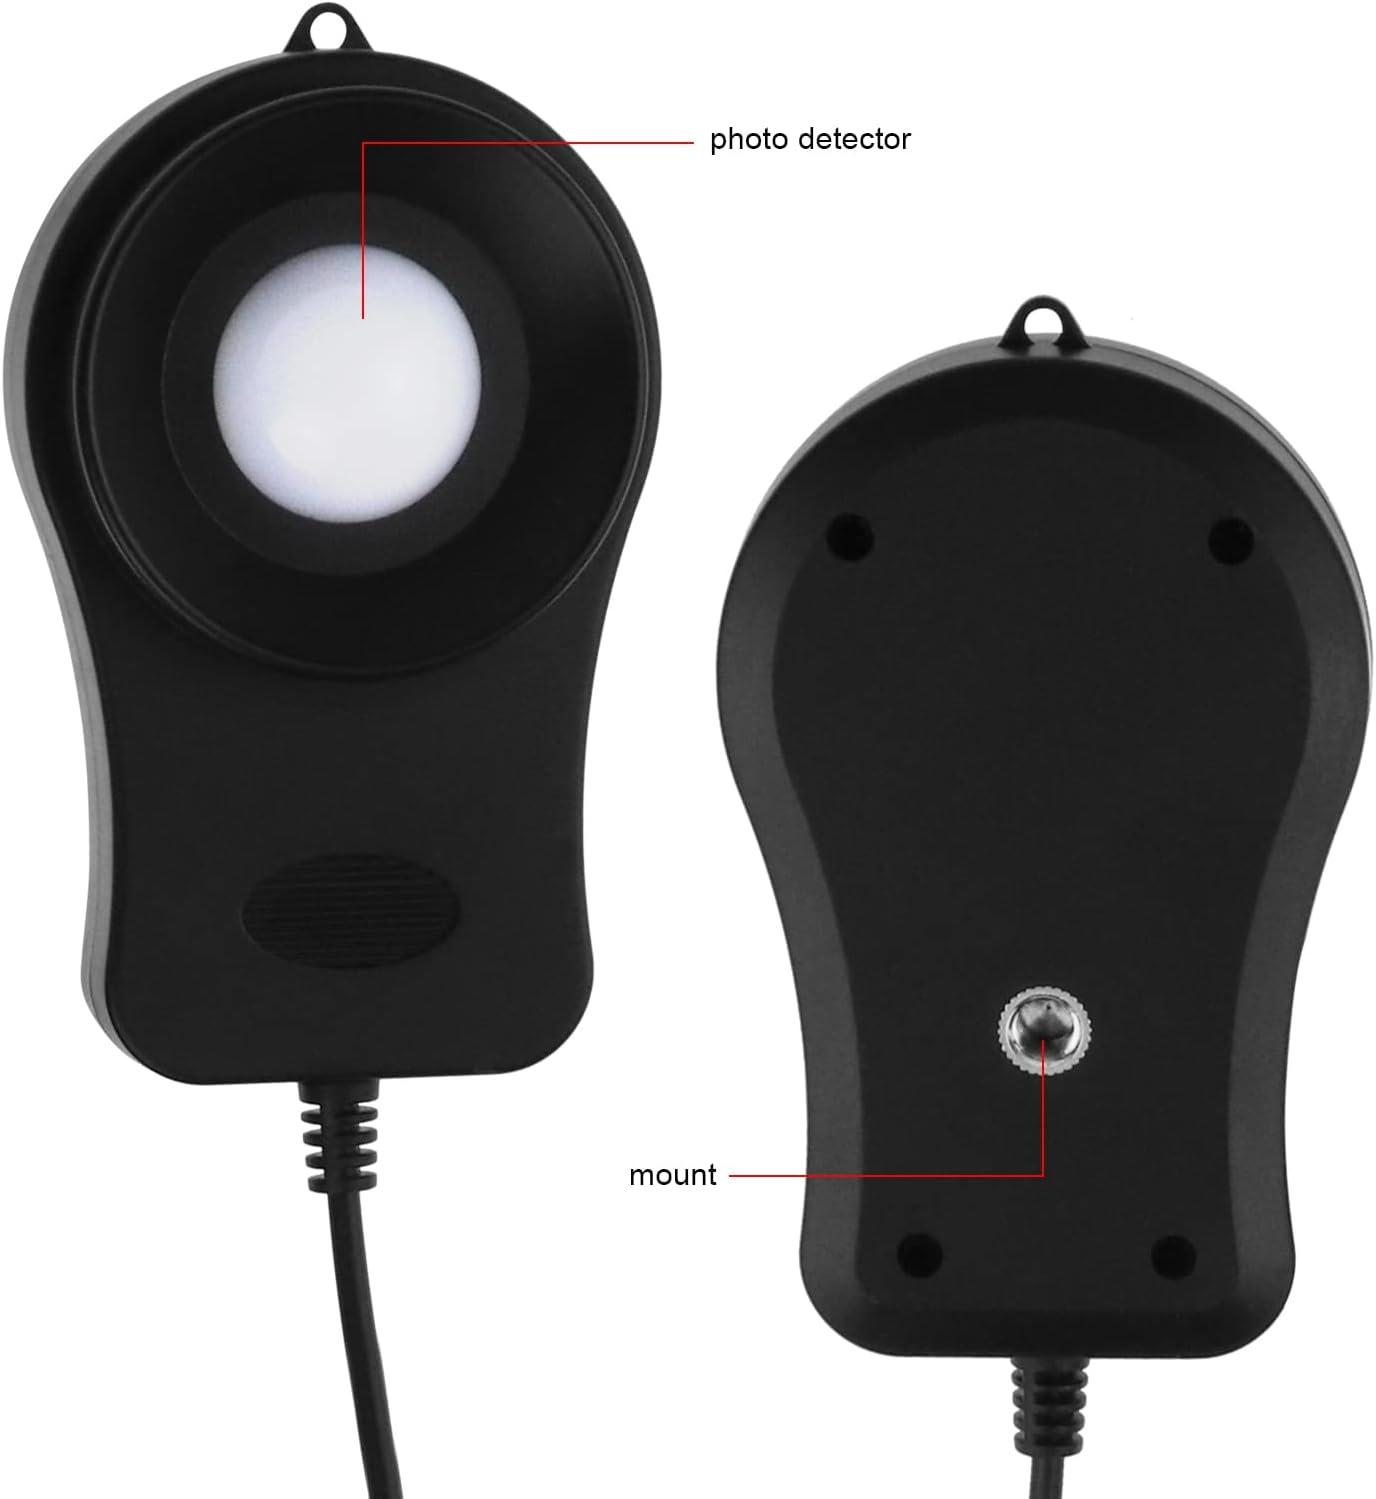 GetUSCart- Light Meter Digital Lux Meter Handheld Illuminance Light Meter  with 360 Degree Rotating Sensor, 4 Digit LCD Display 0~200,000 Measurement  Range Luxmeter Tester for Plants, Headlights, Home & Office